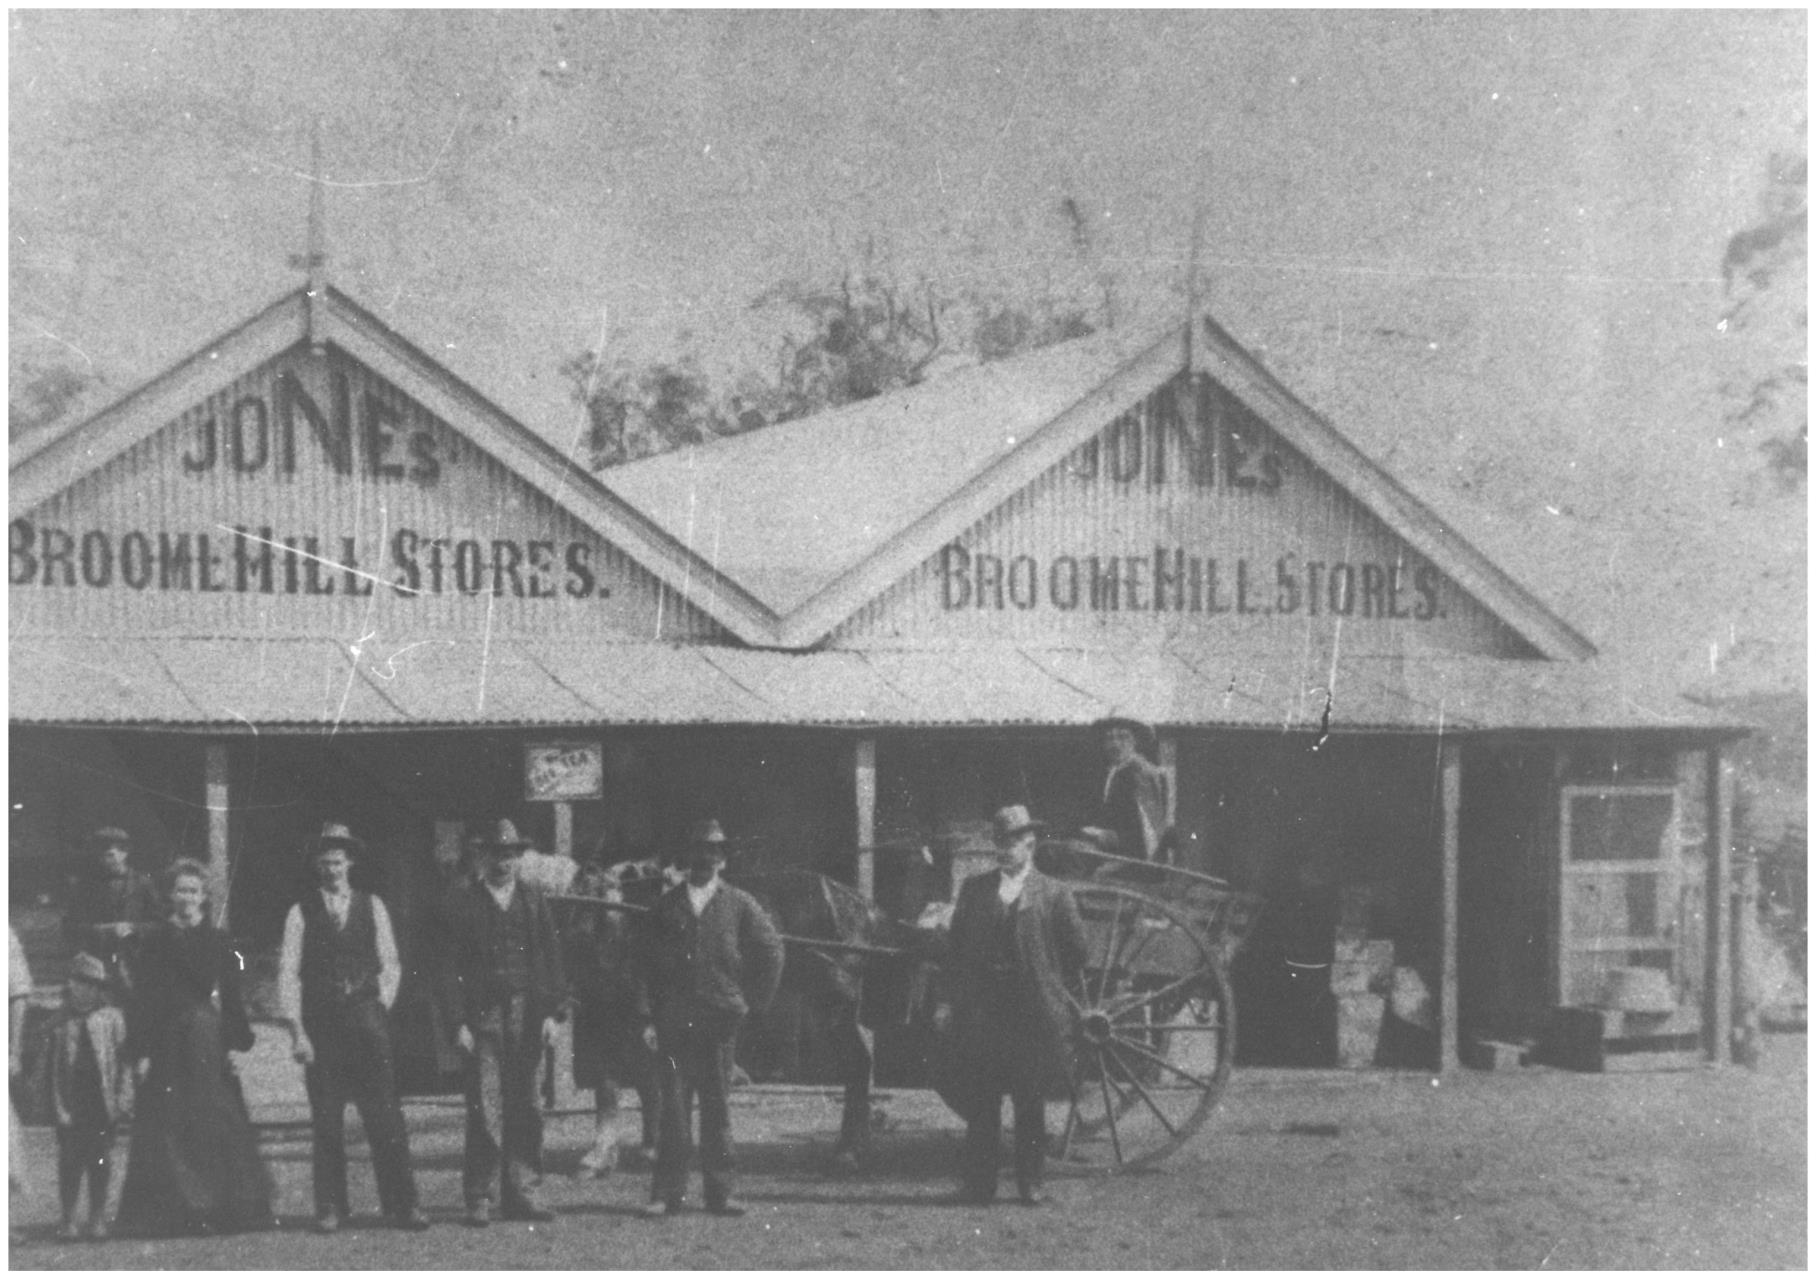 Jones stores Jasper St Broomehill c1899